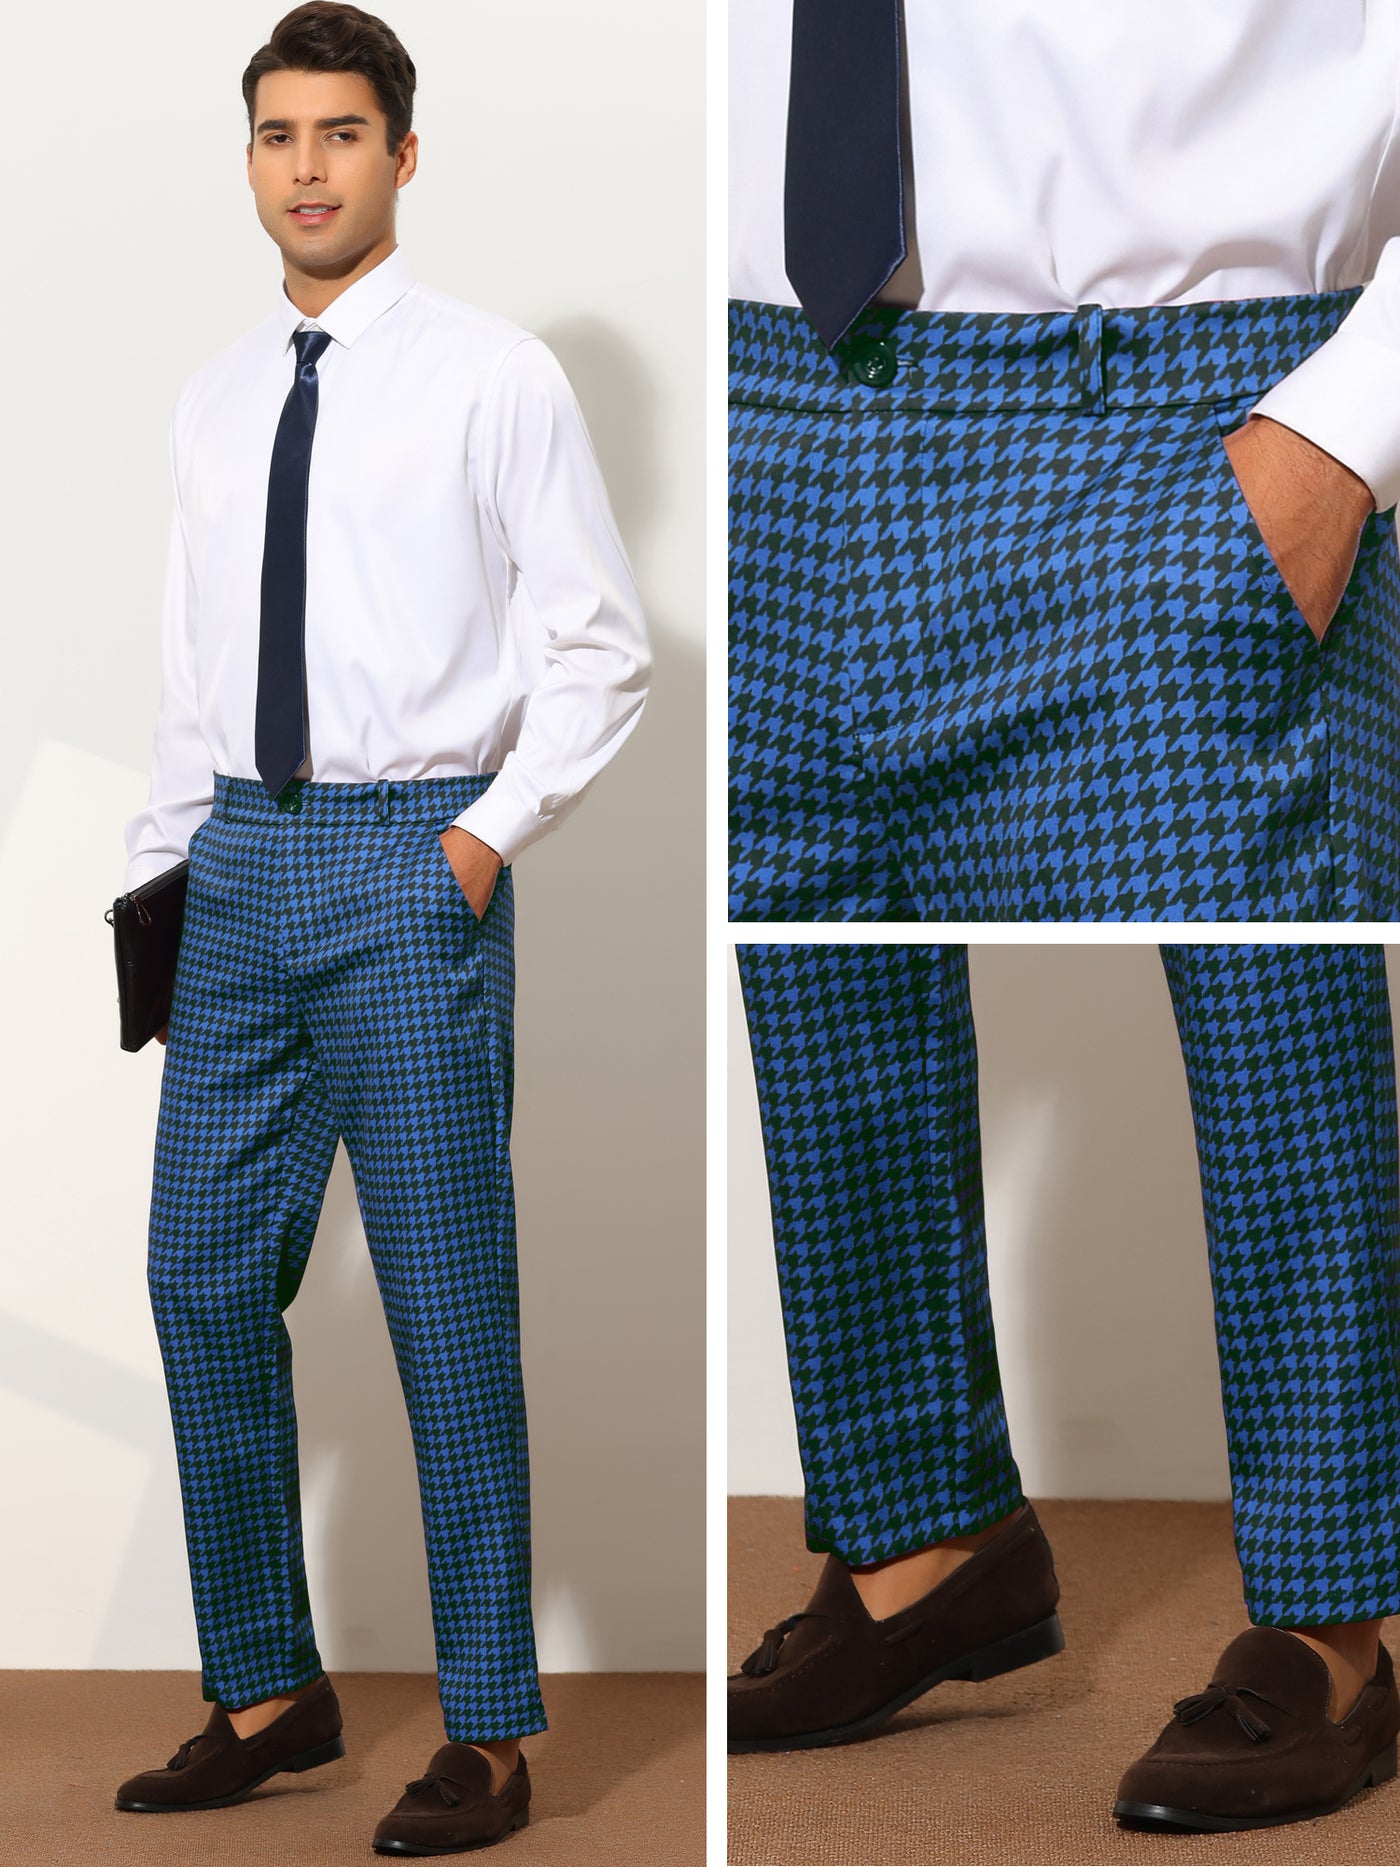 Bublédon Houndstooth Pattern Pants for Men's Slim Fit Classic Business Plaid Dress Trousers